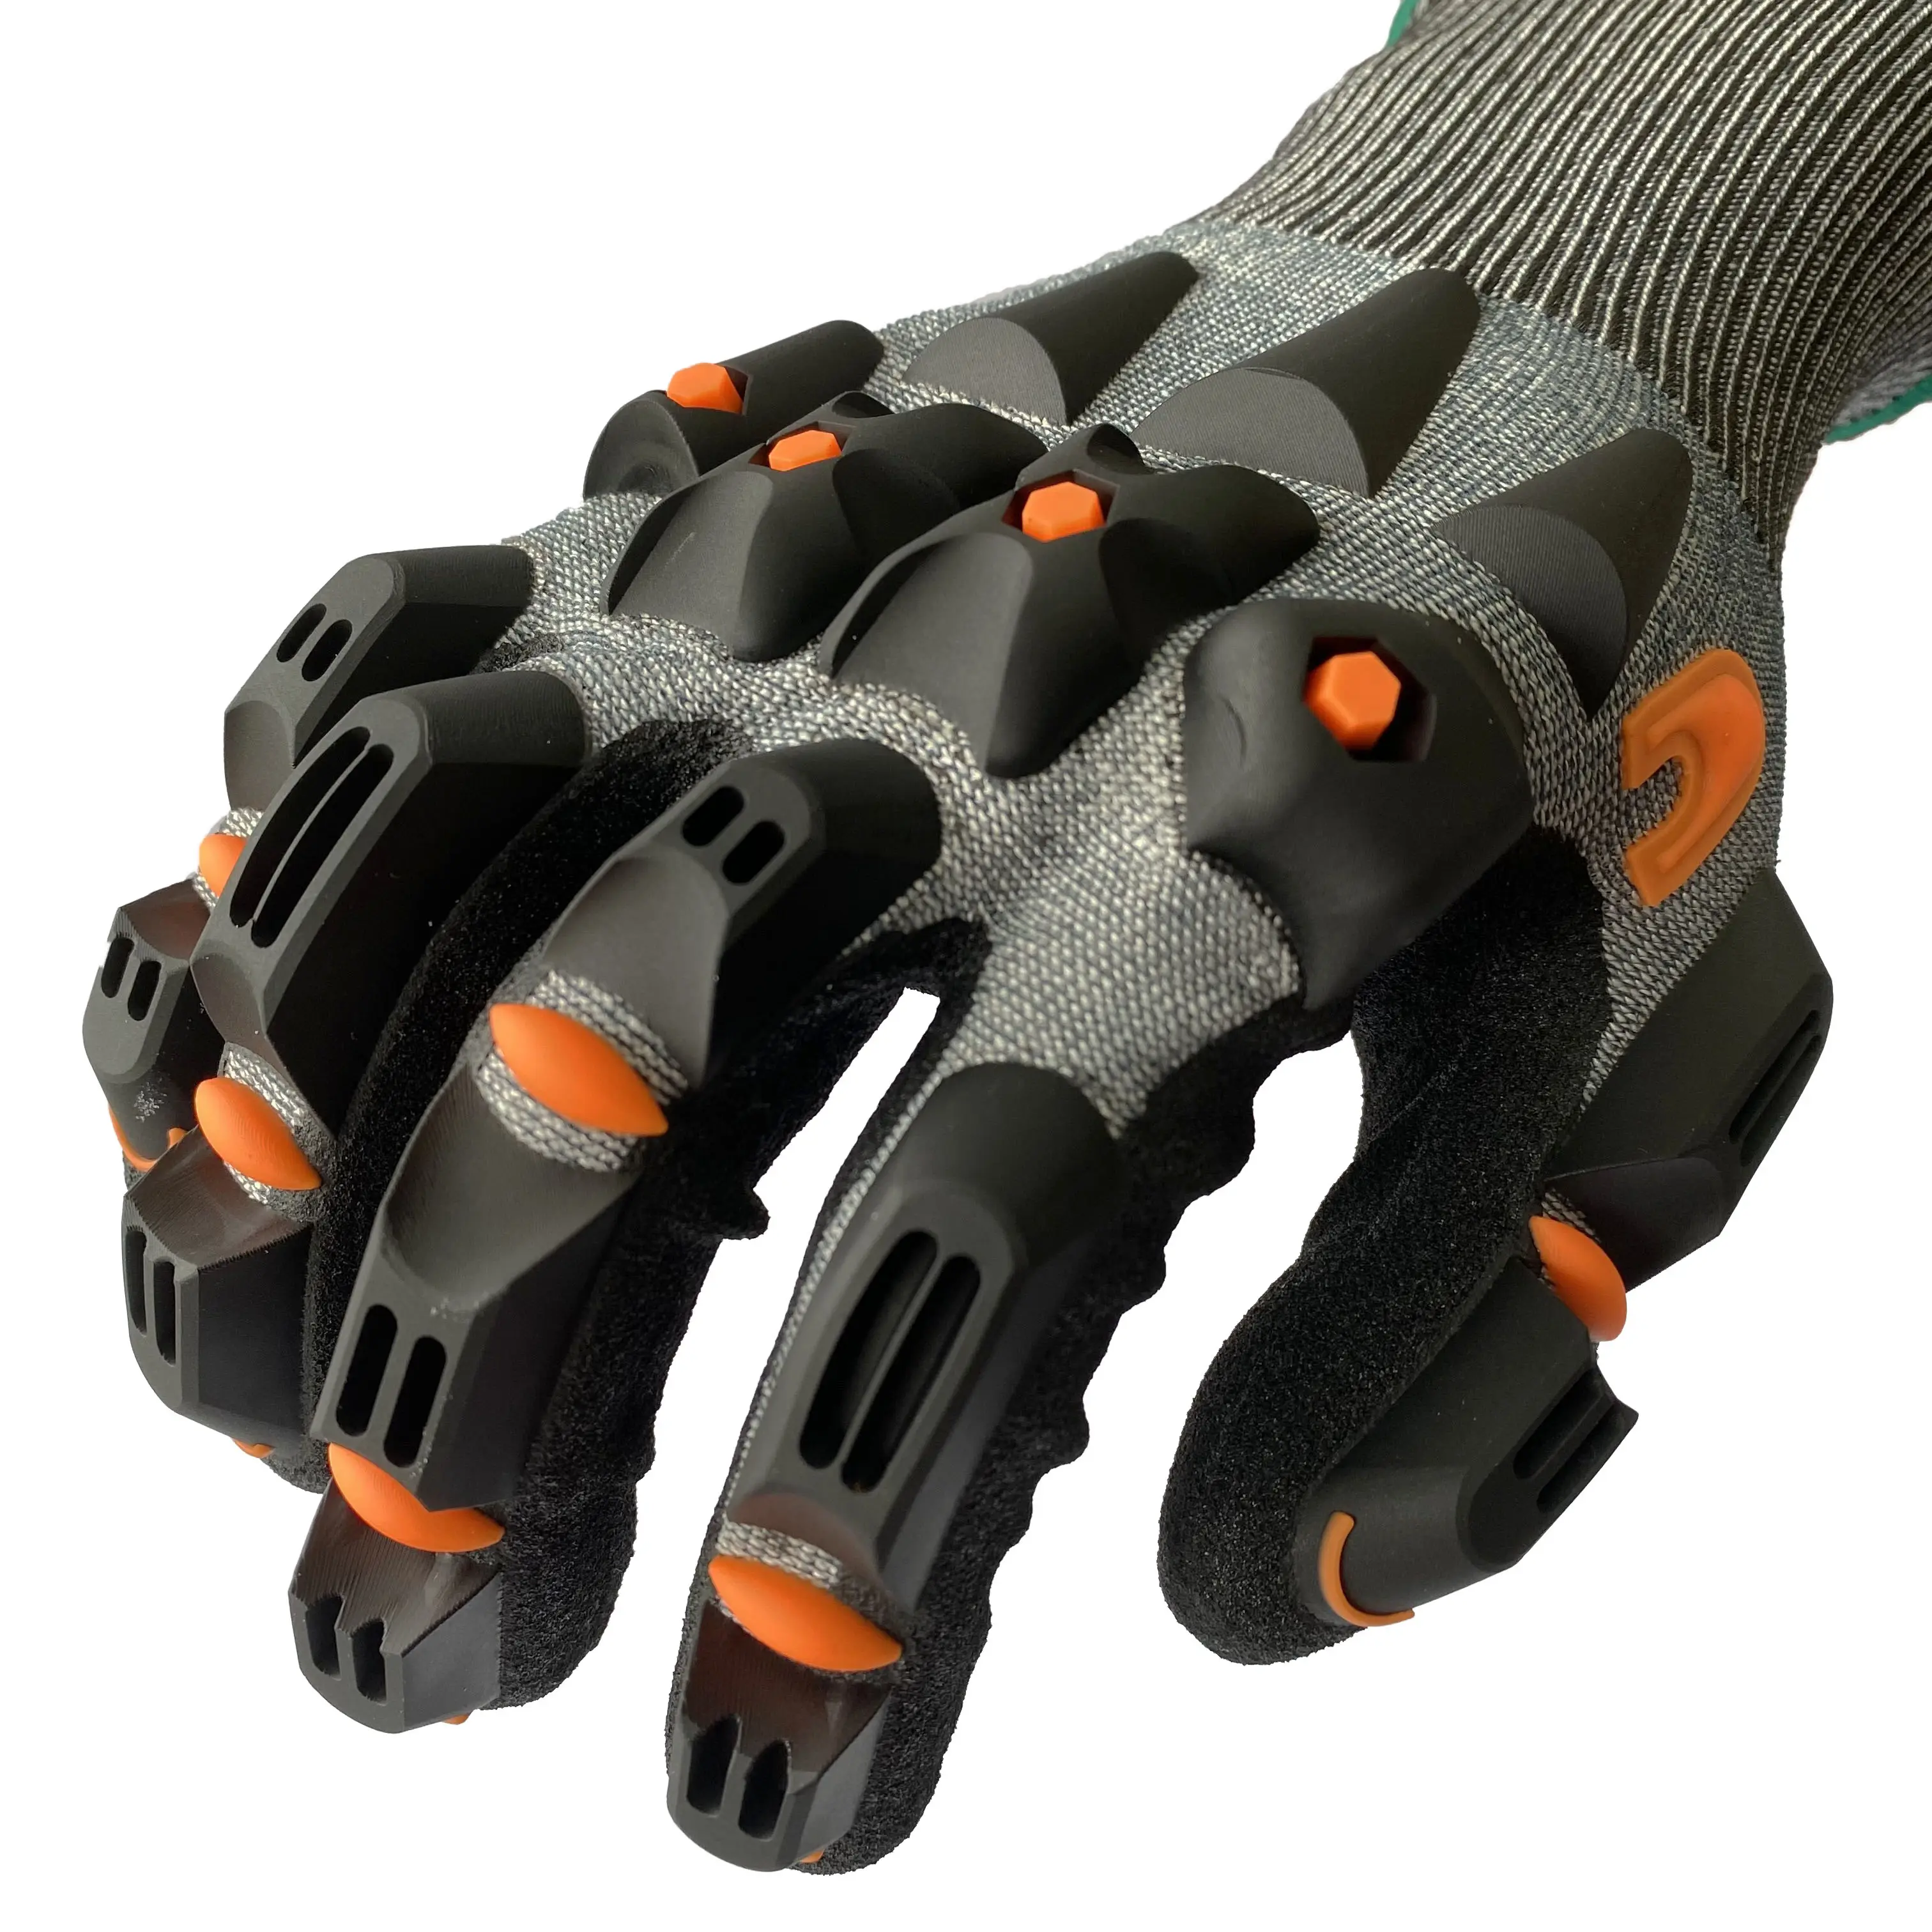 Sandy Nitrile coat anti impact level 3 gloves anti cut safety gloves